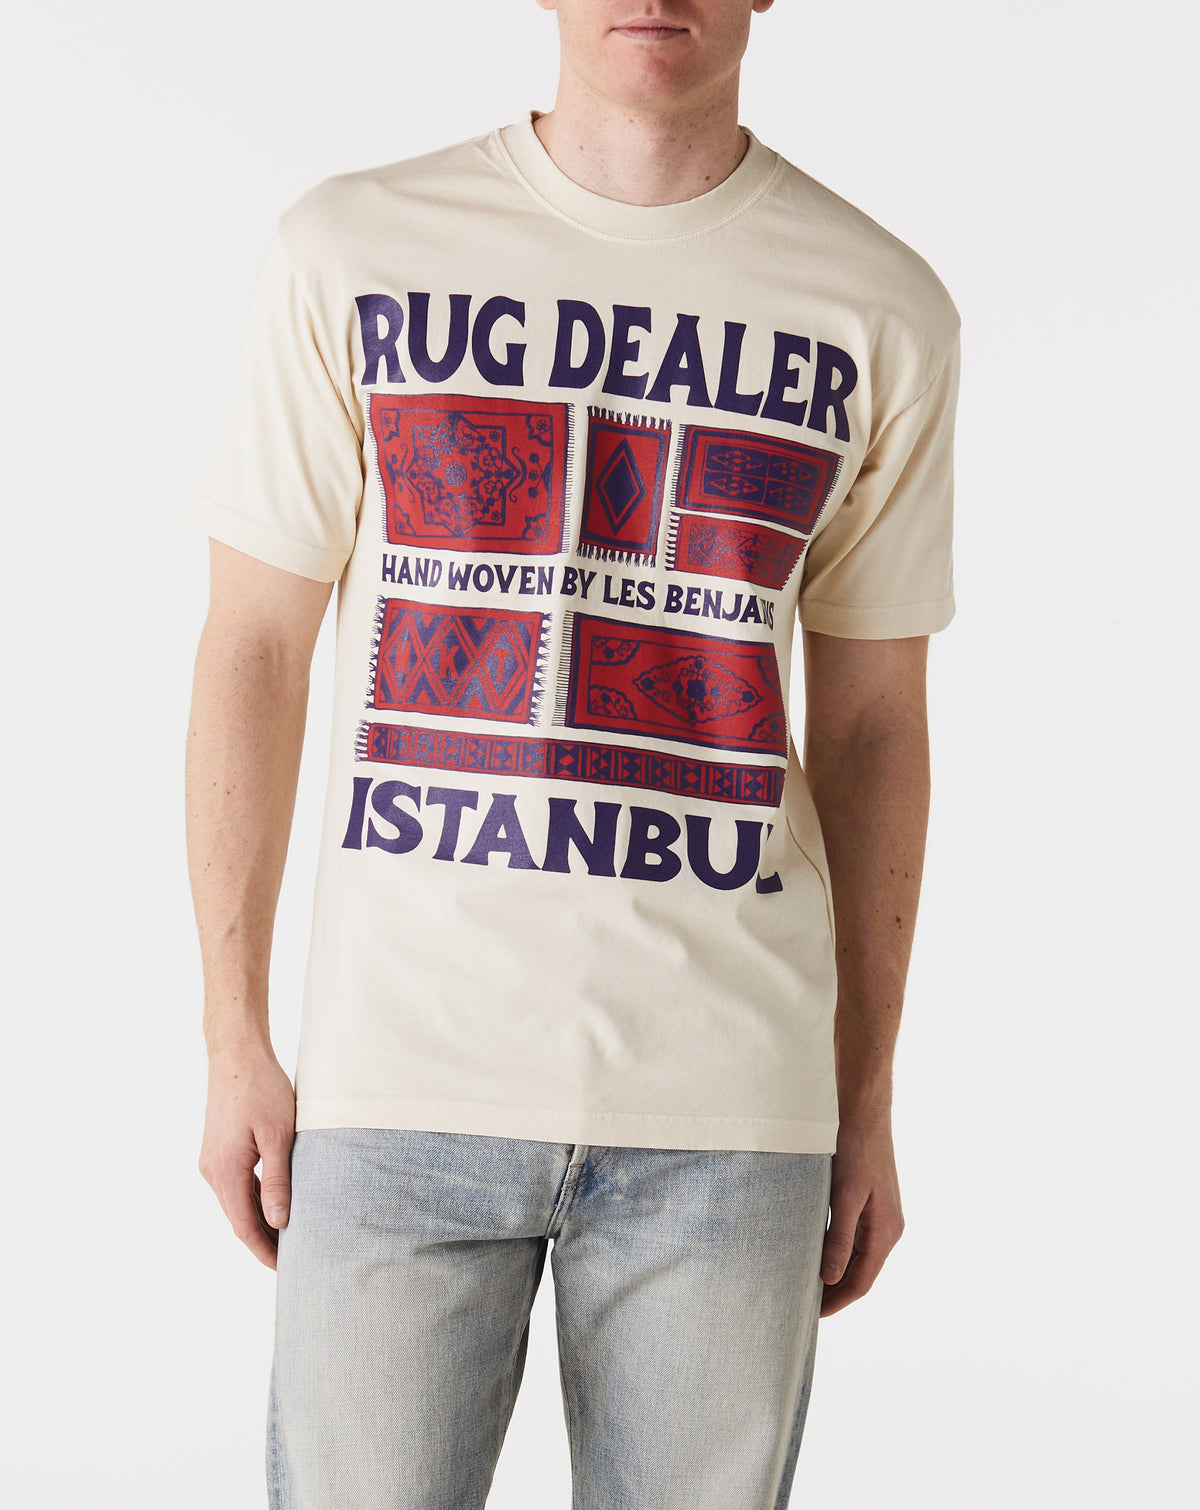 Market Rug Dealer Istanbul T-Shirt - Rule of Next Apparel